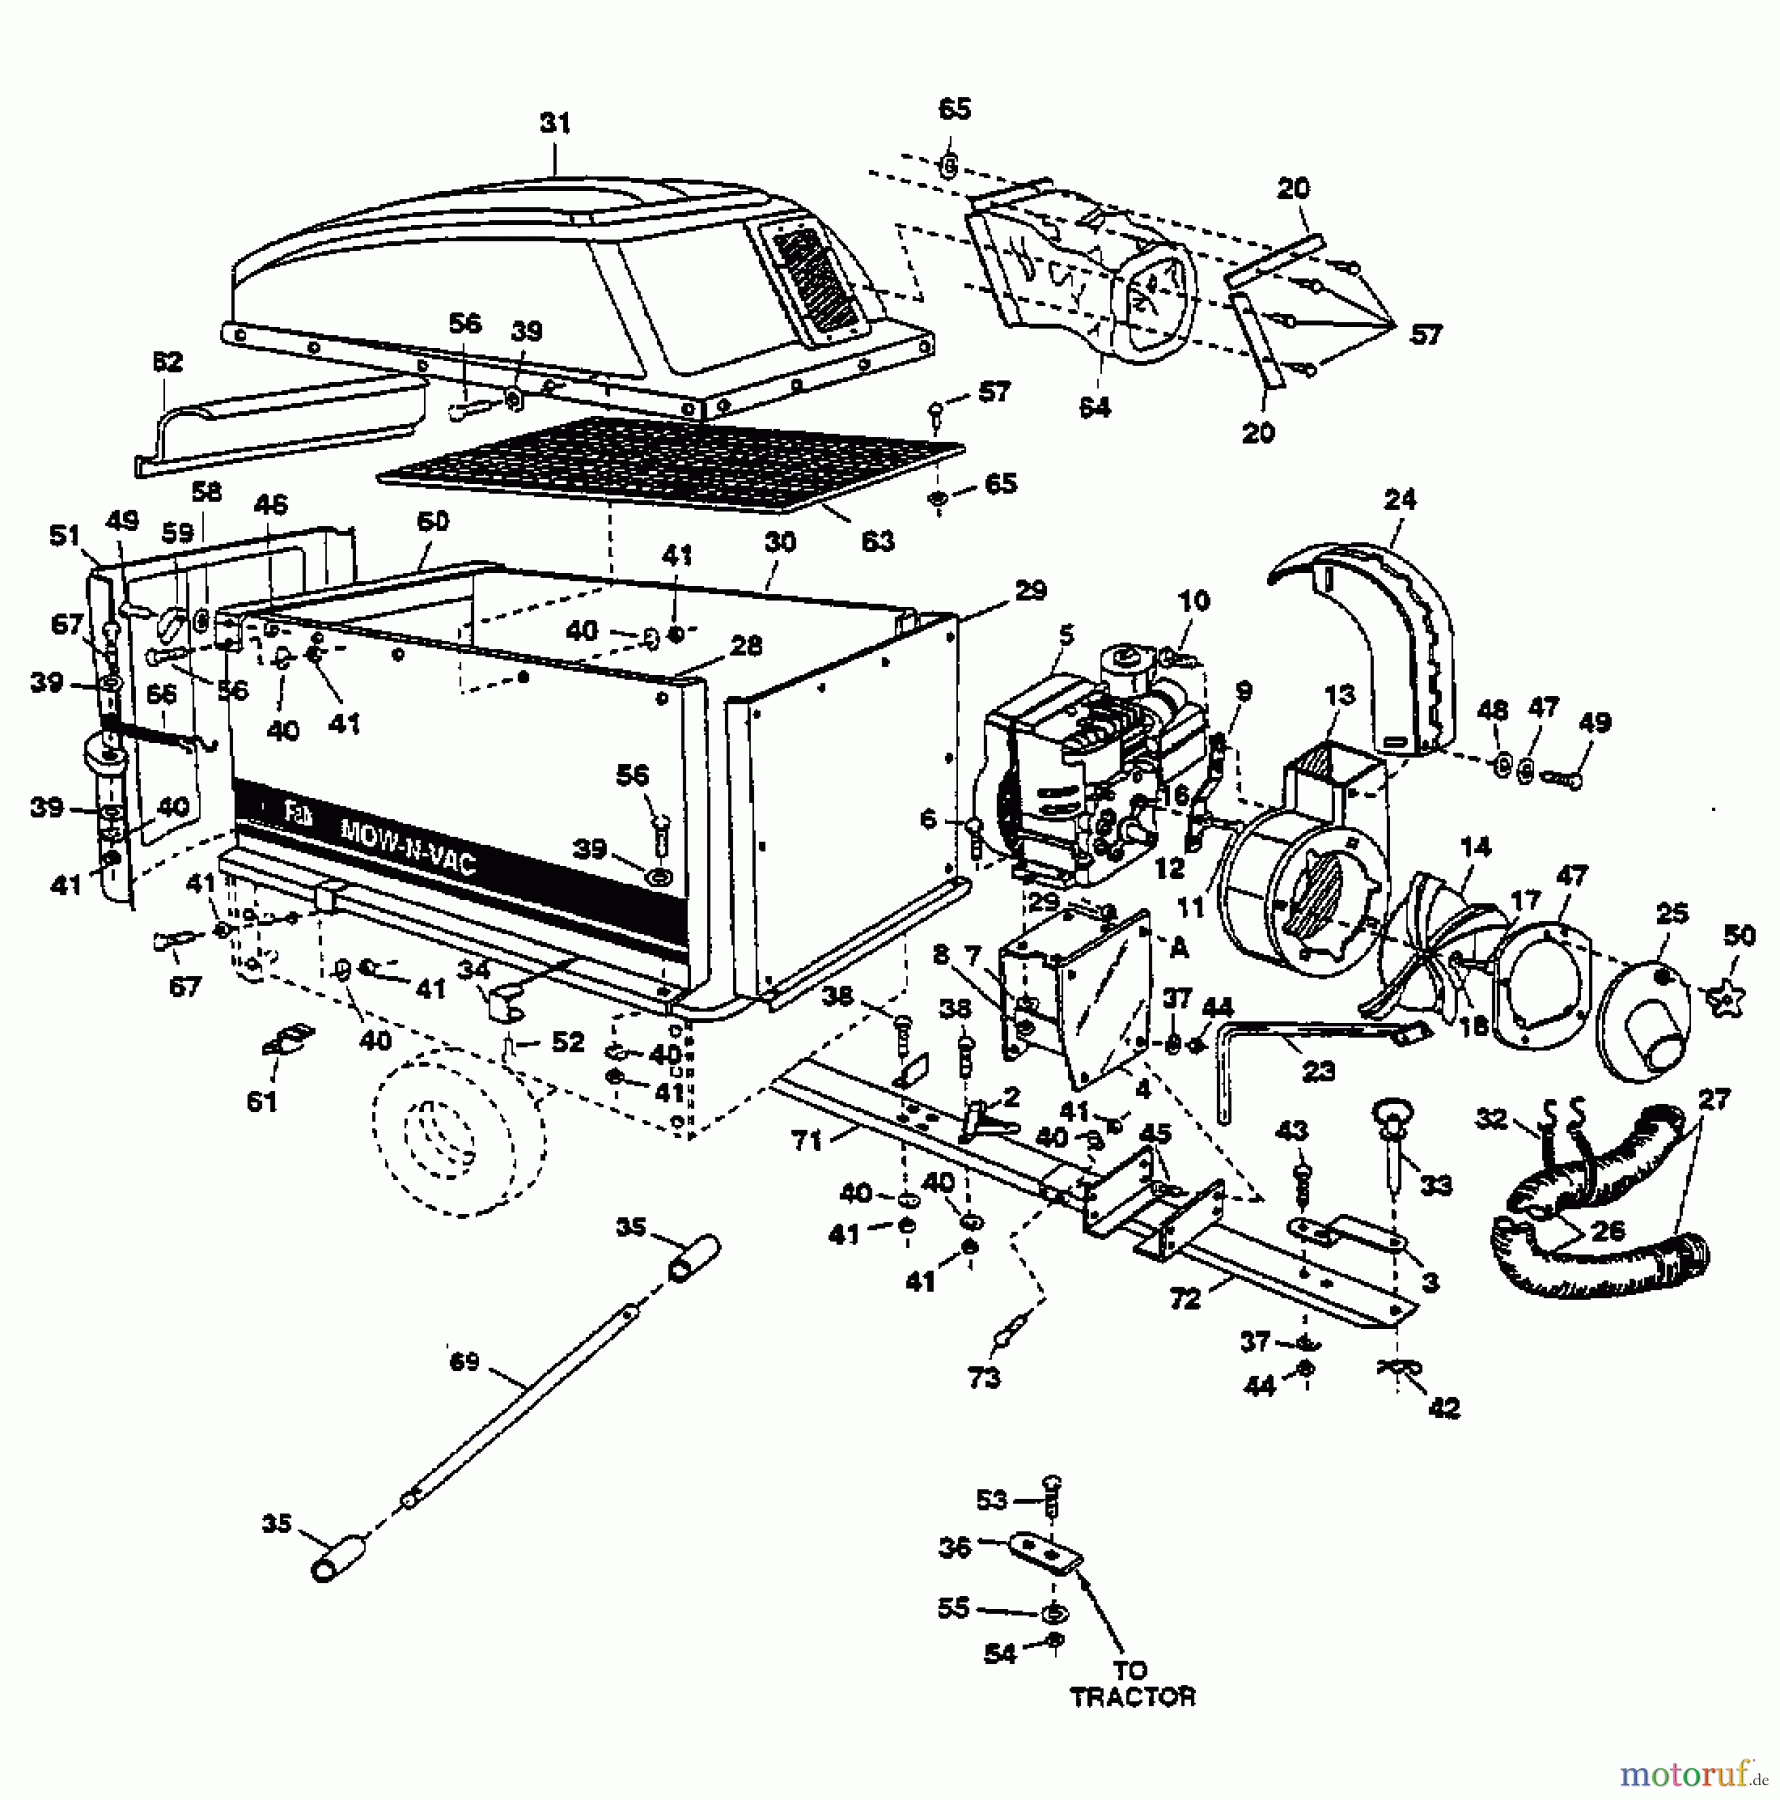  MTD Accessories Accessories garden and lawn tractors Blower Mow-Vac 501885  (1999) Basic machine